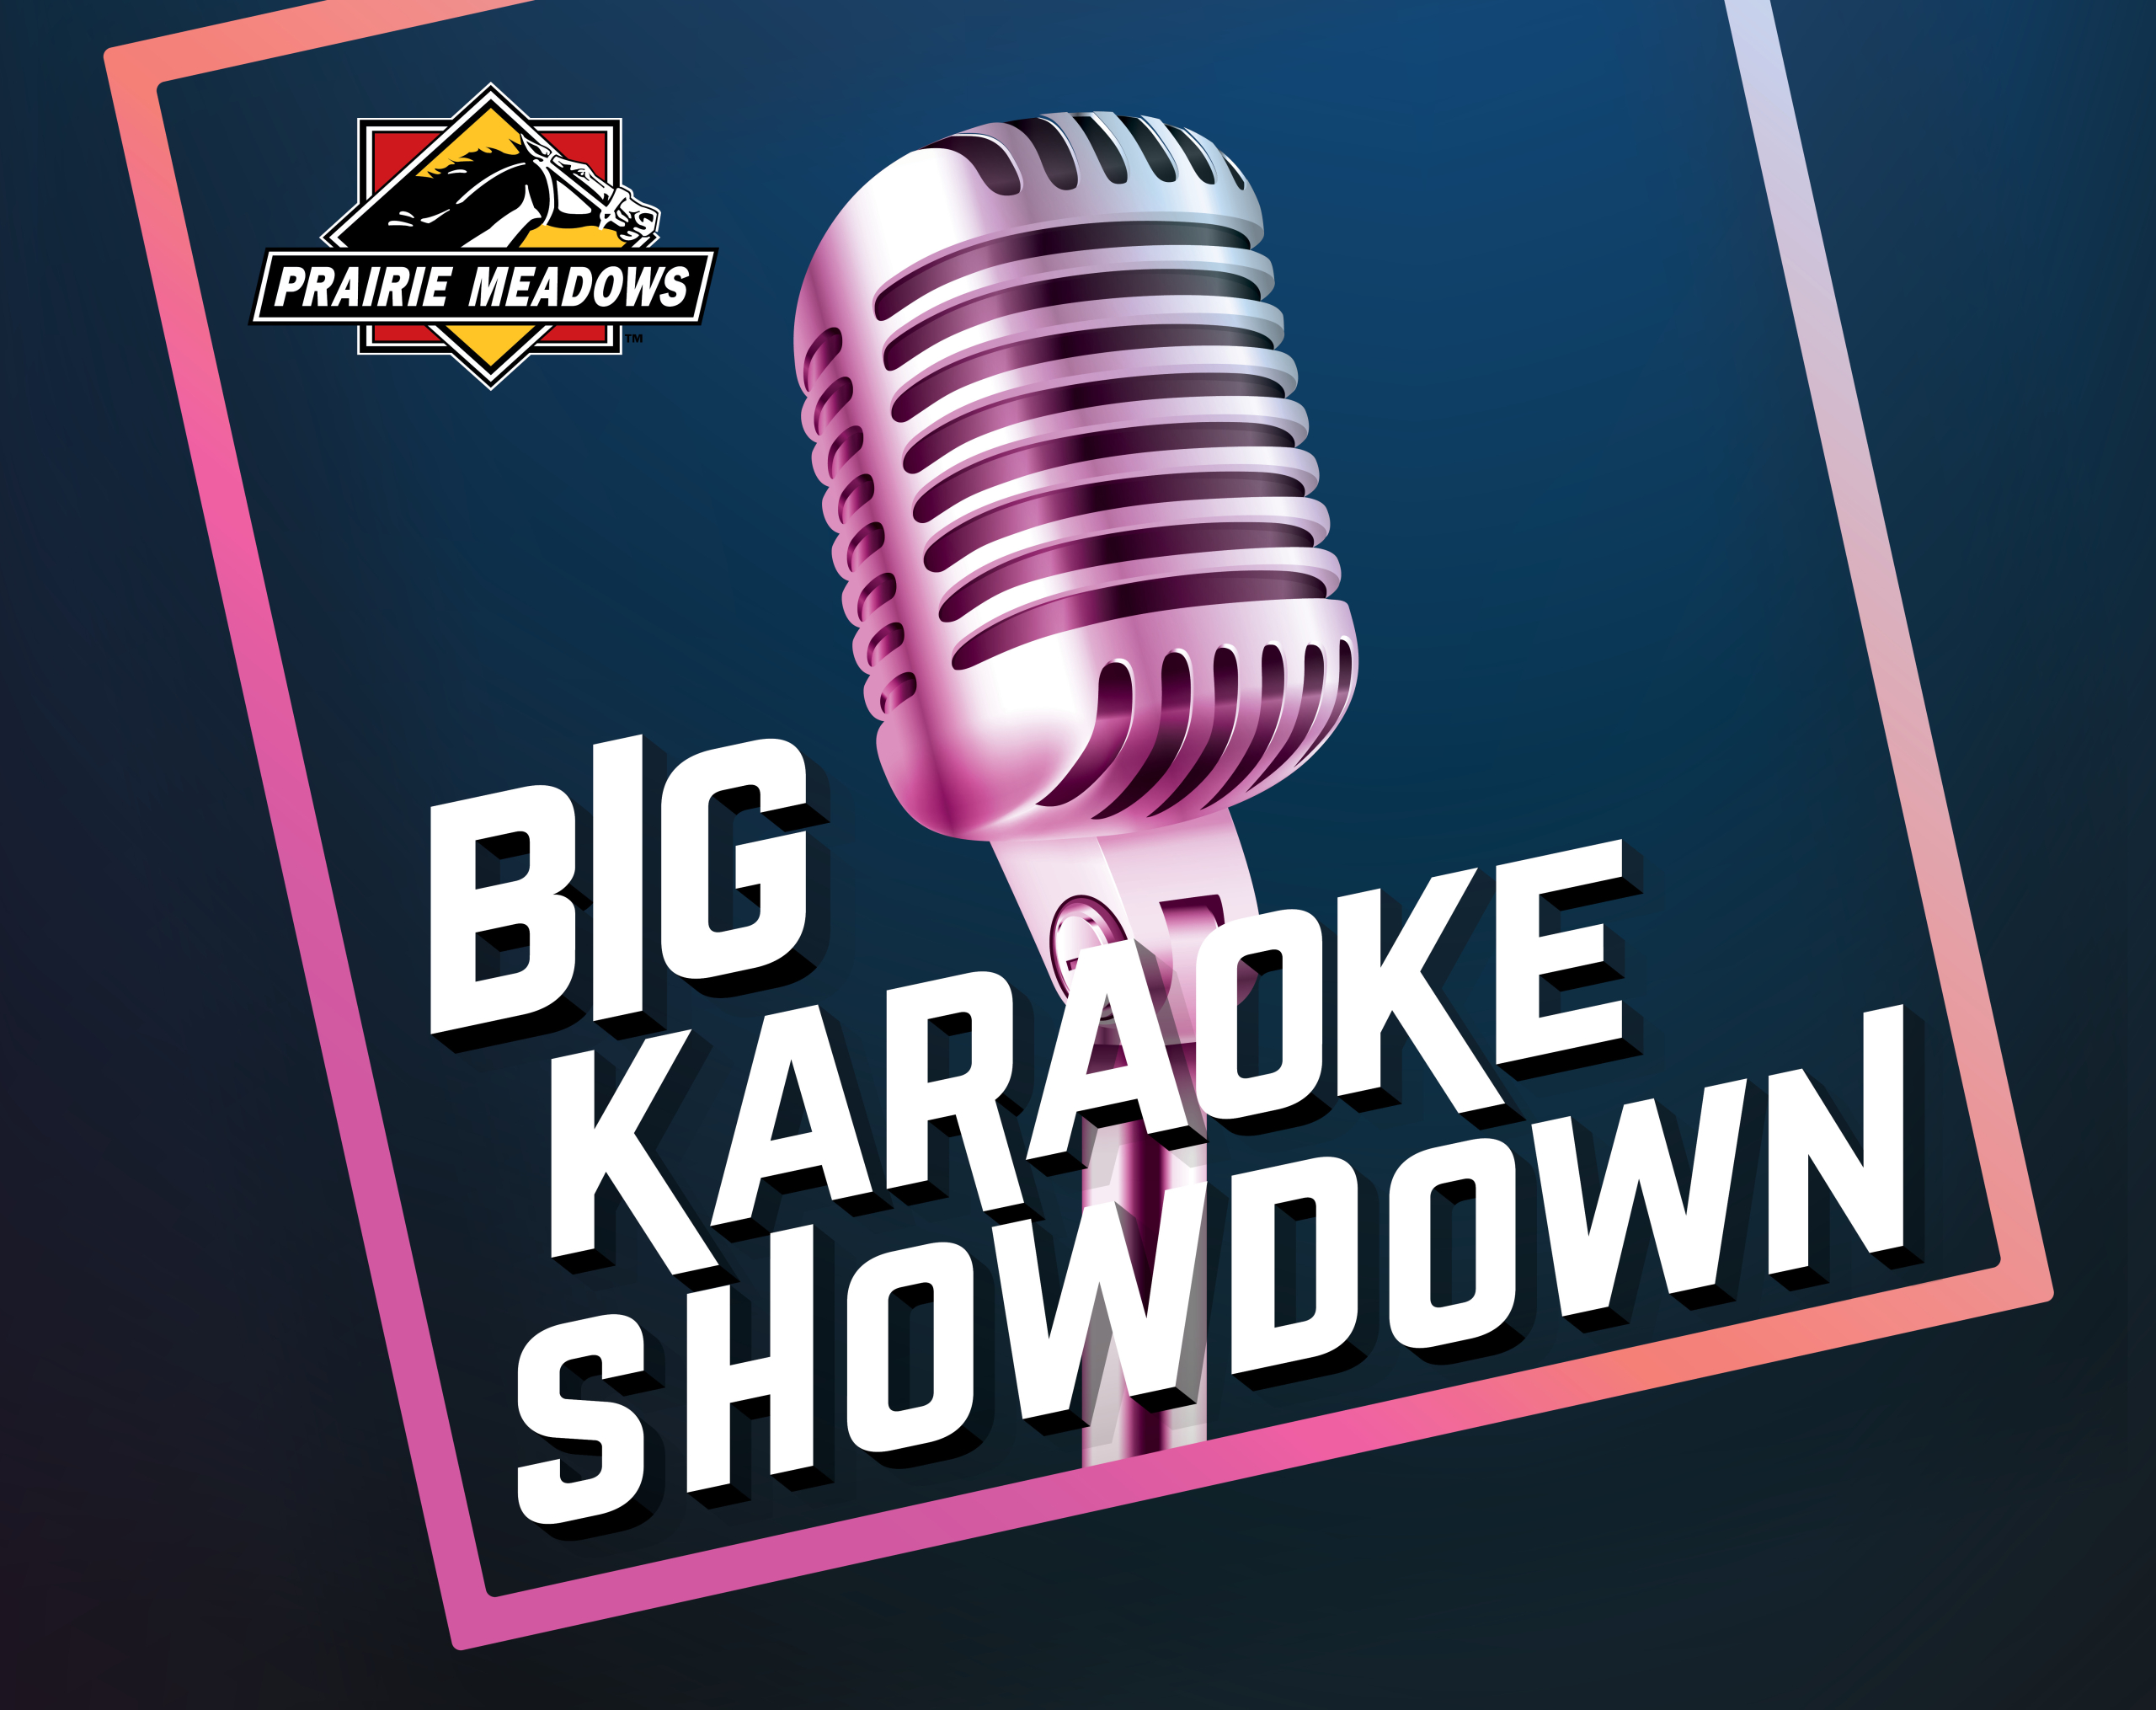 Big Karaoke Showdown